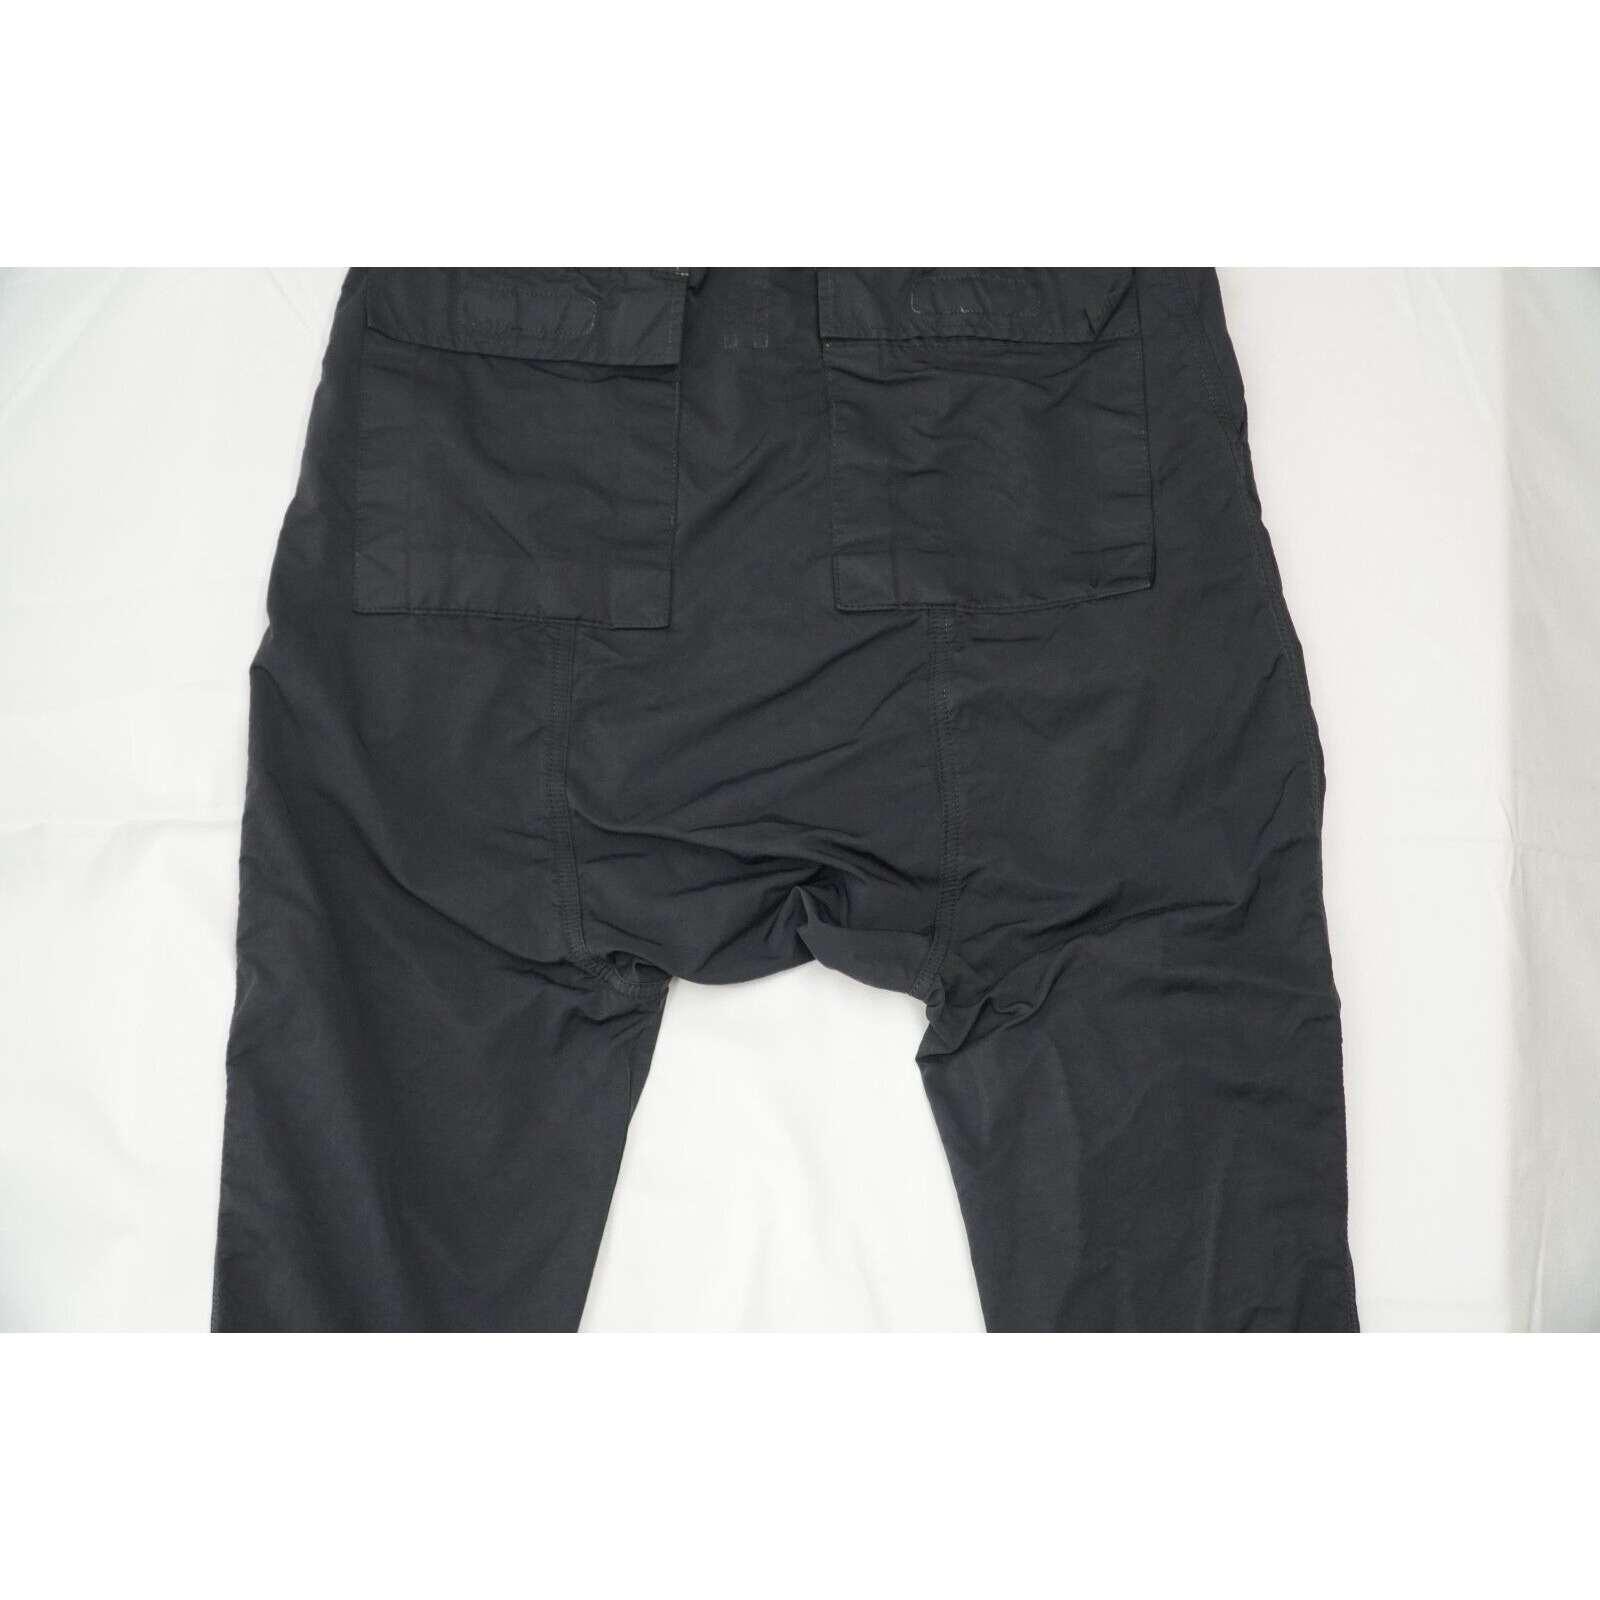 Black Lounge Pants Elastic Drawstring Drop Crotch Large - 8